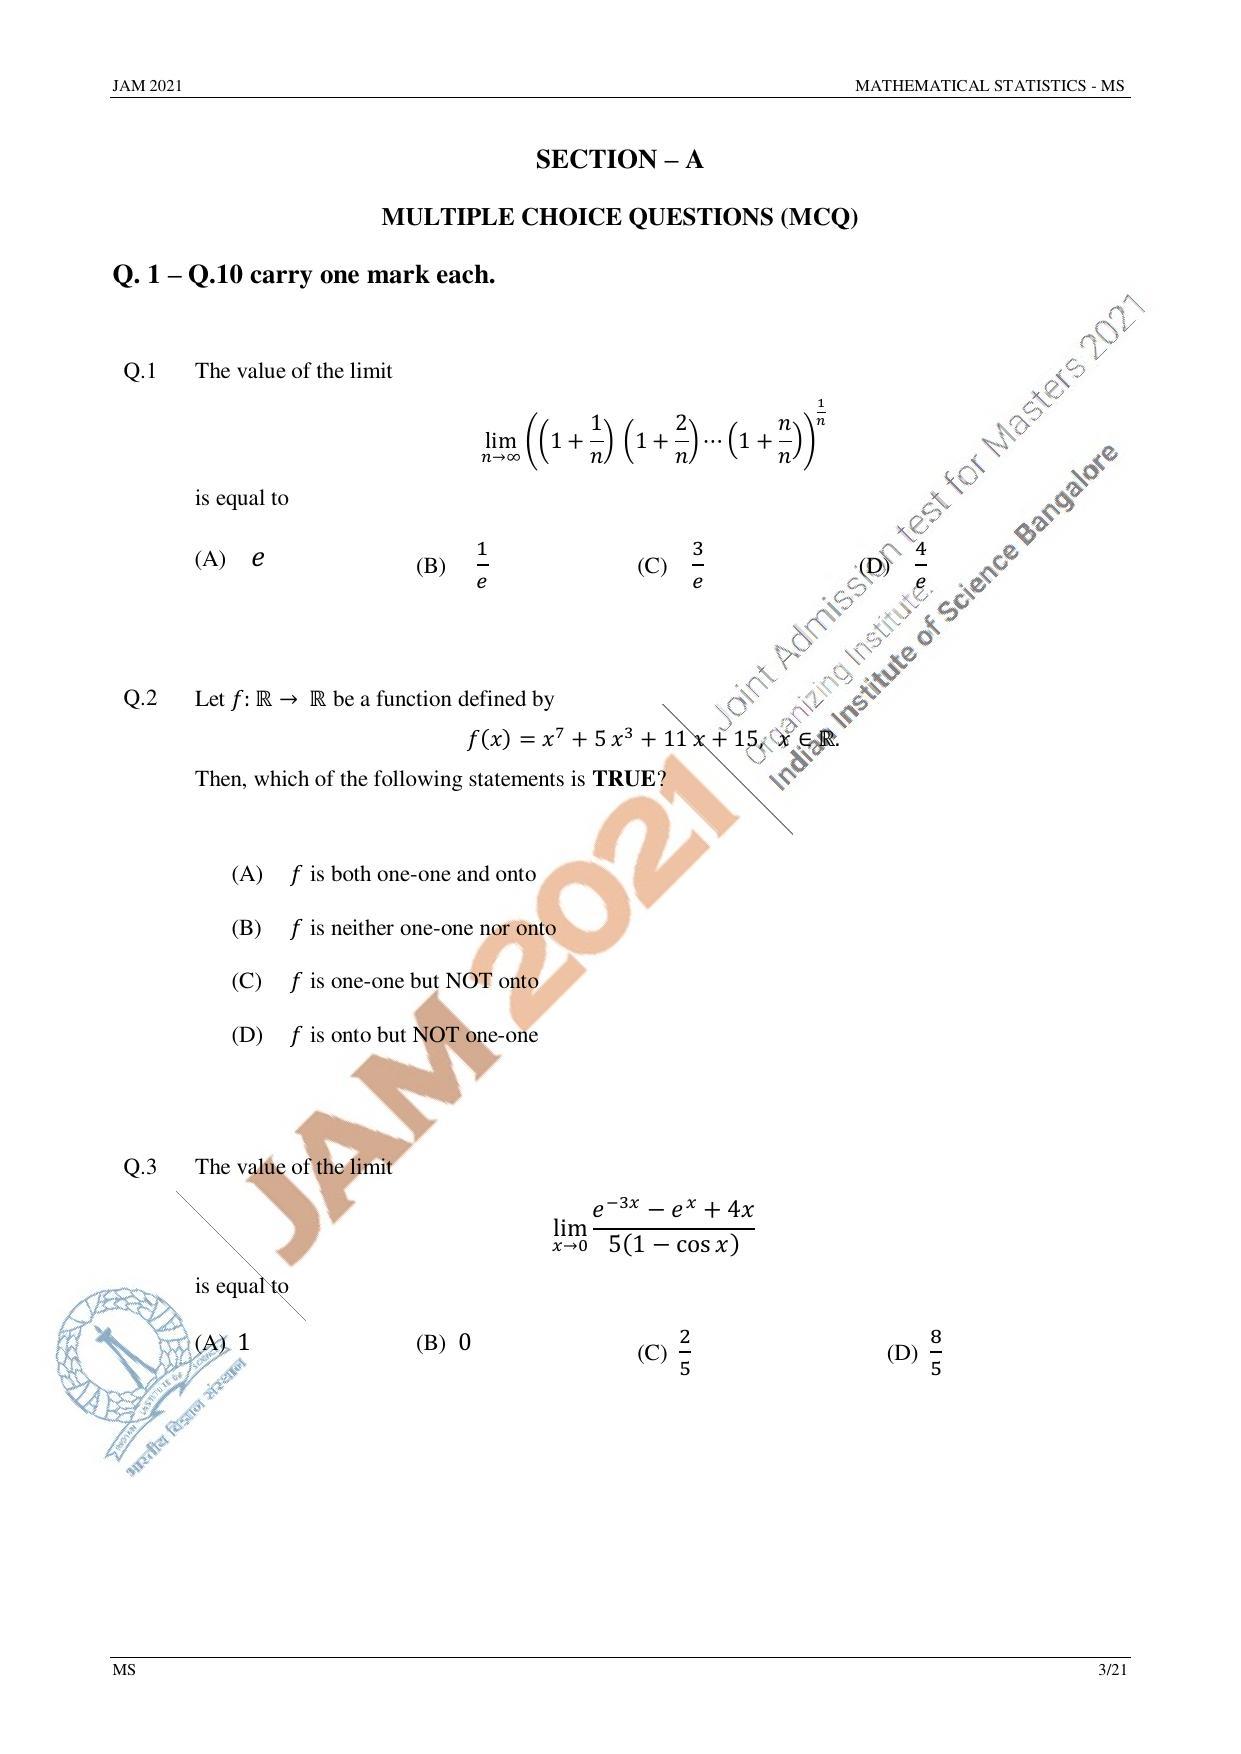 JAM 2021: MS Question Paper - Page 3